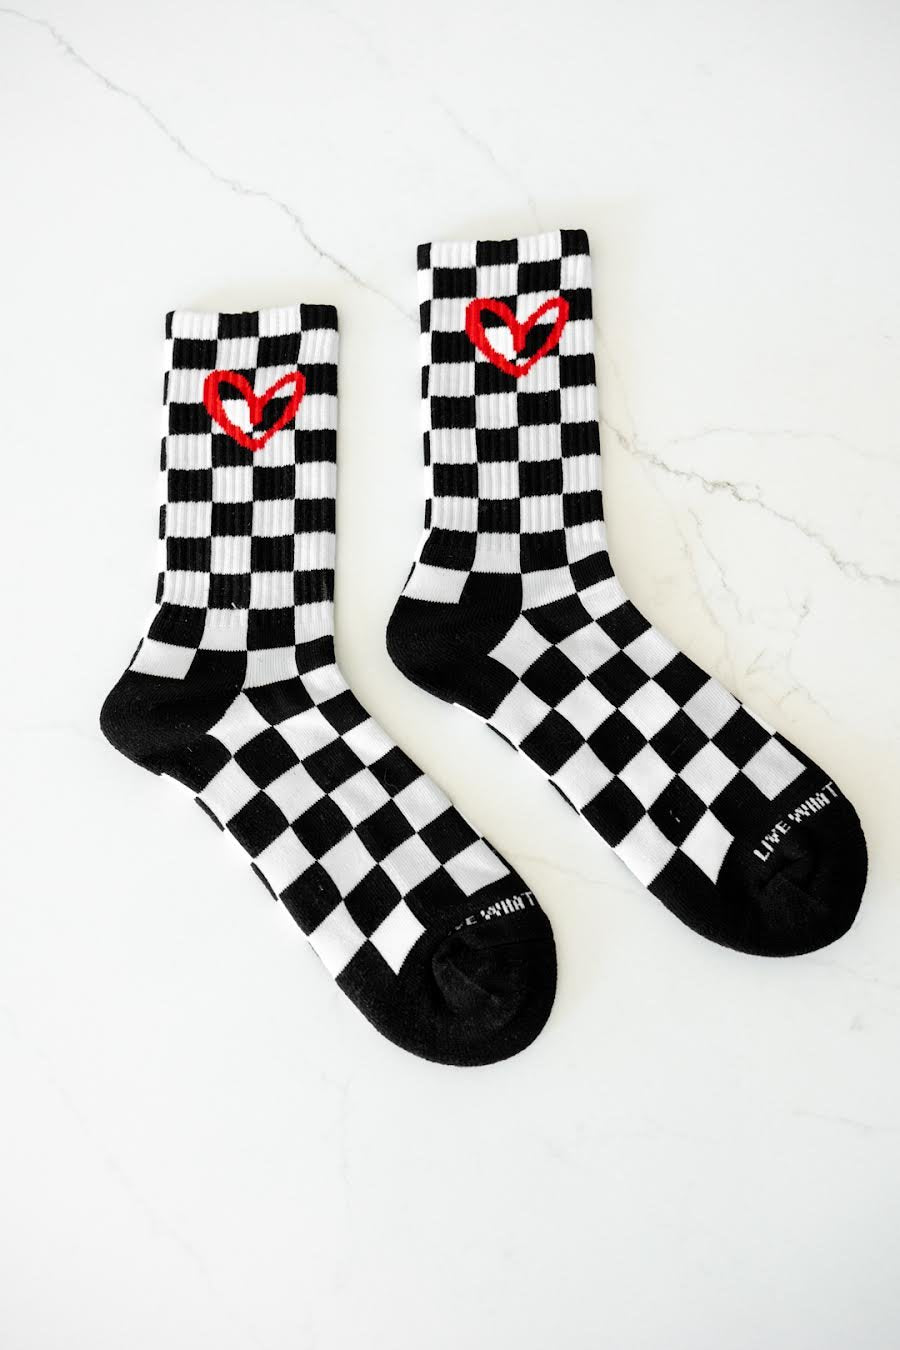 LWYL Checkered Socks